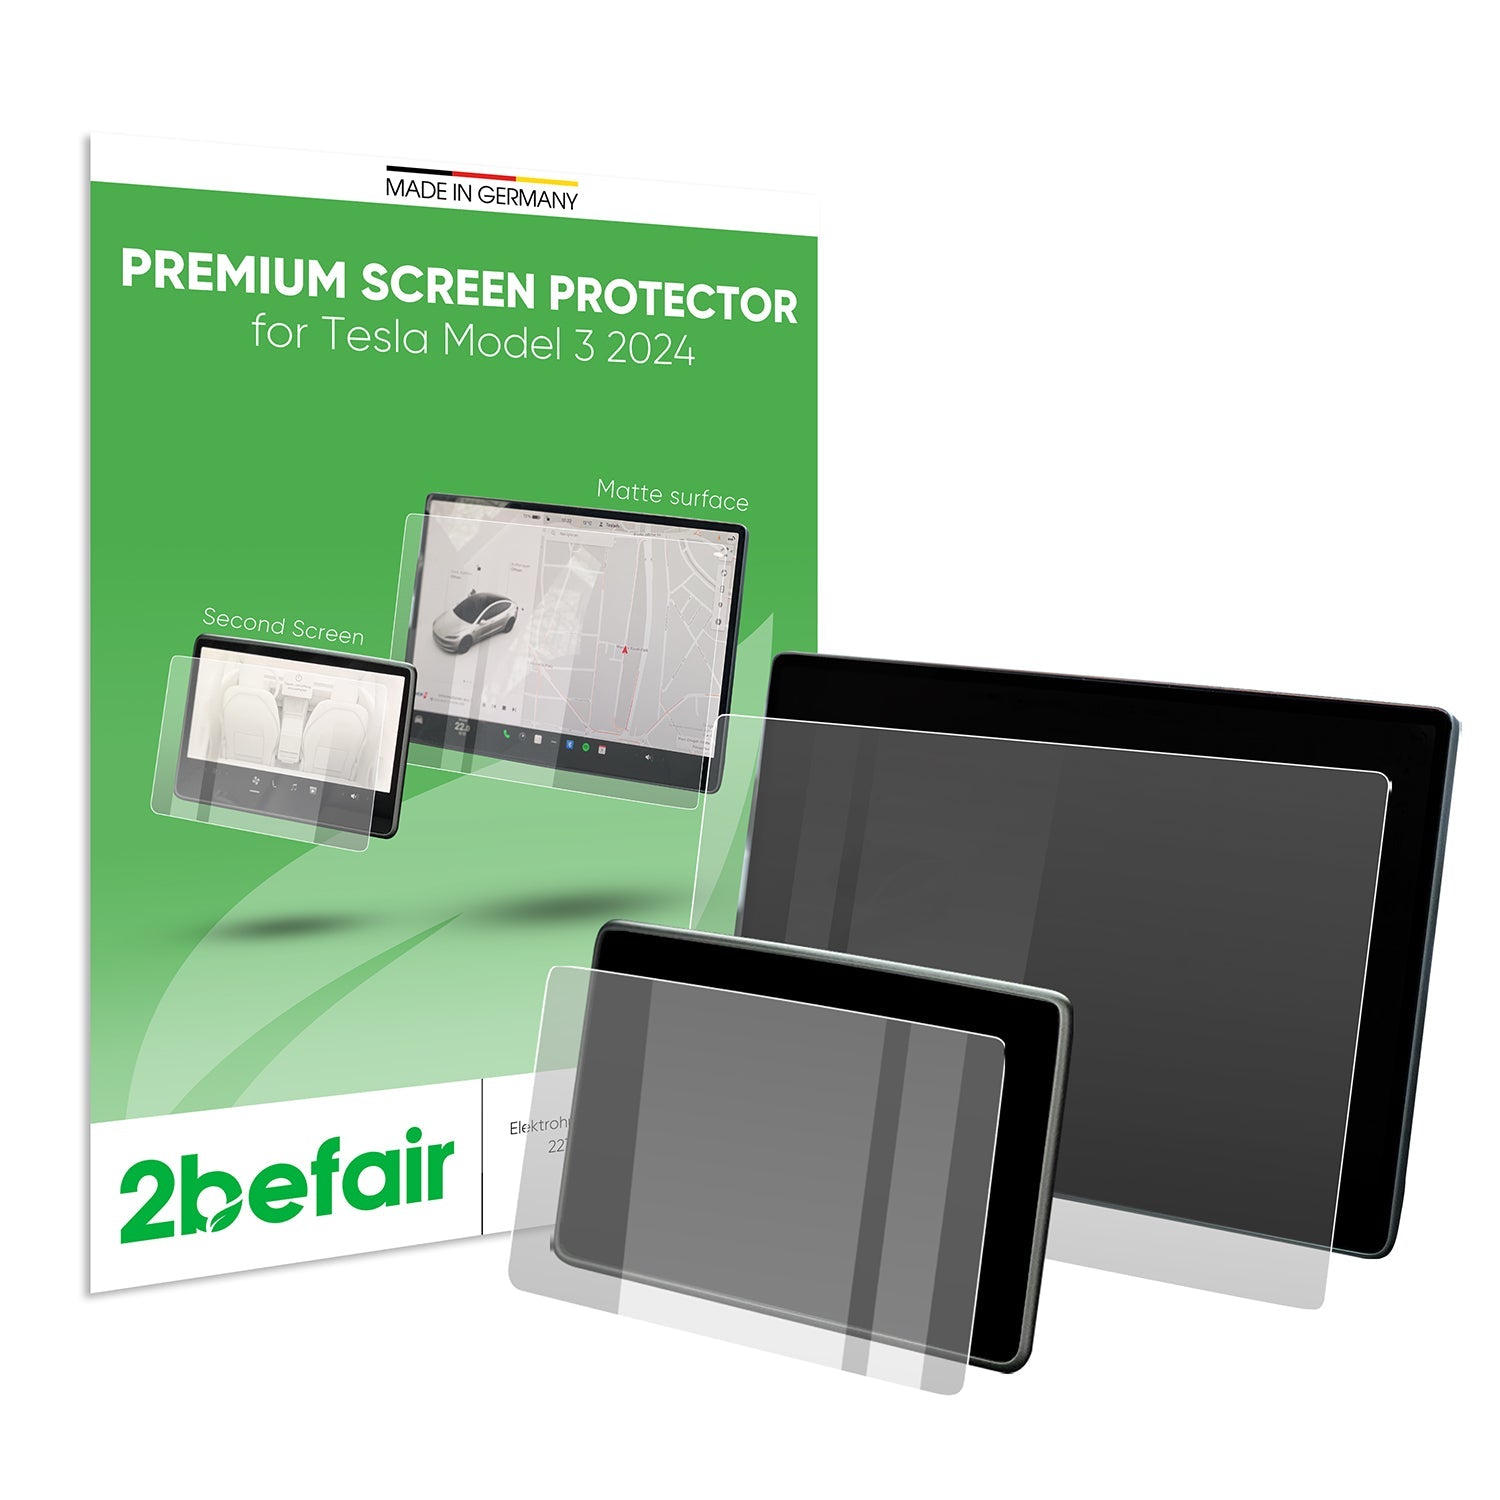 2befair screen protector (matt/clear) for the Tesla Model 3/Y